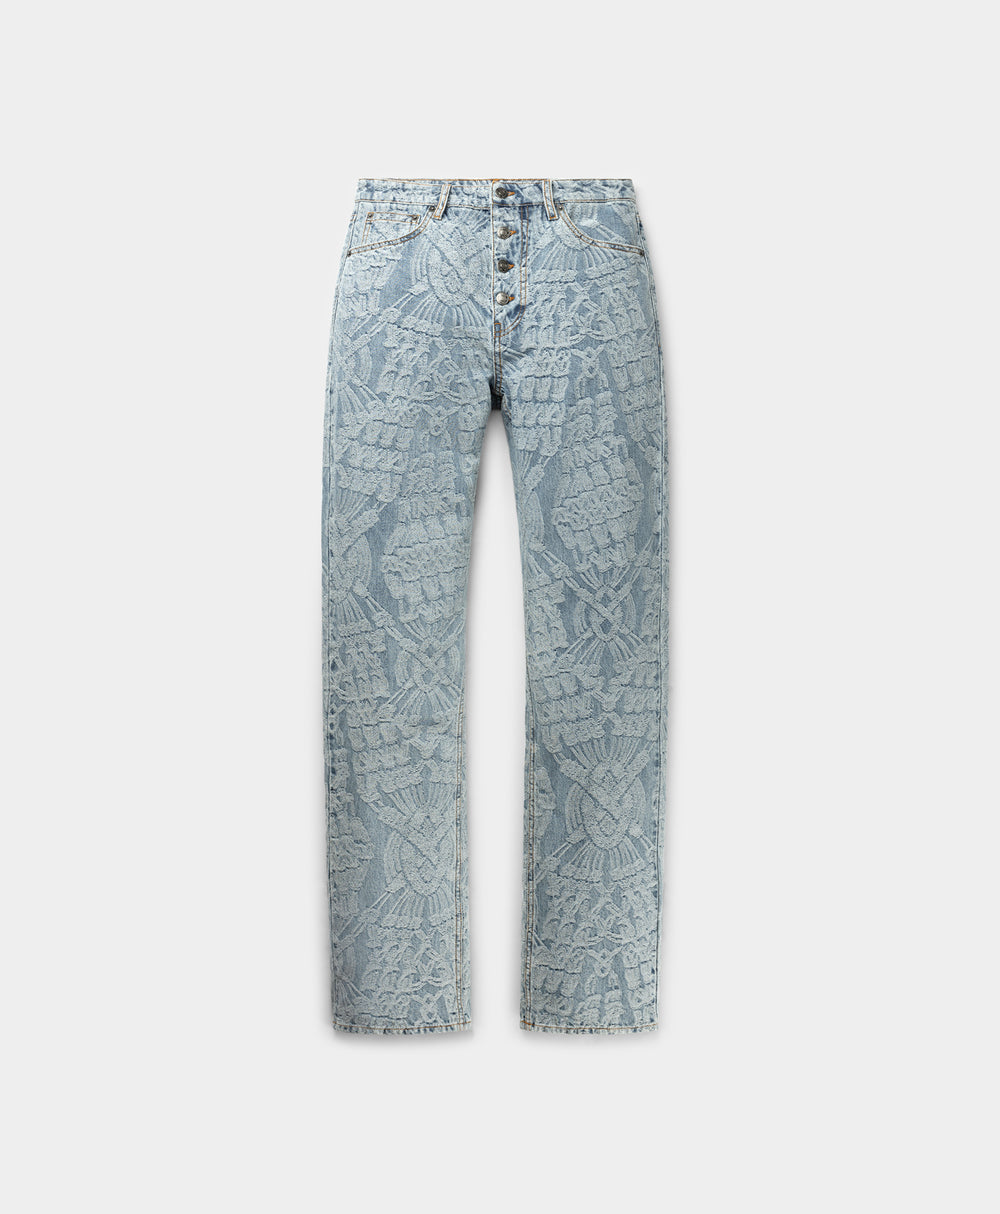 DP - Light Blue Settle Macrame Denim Pants - Packshot - Front